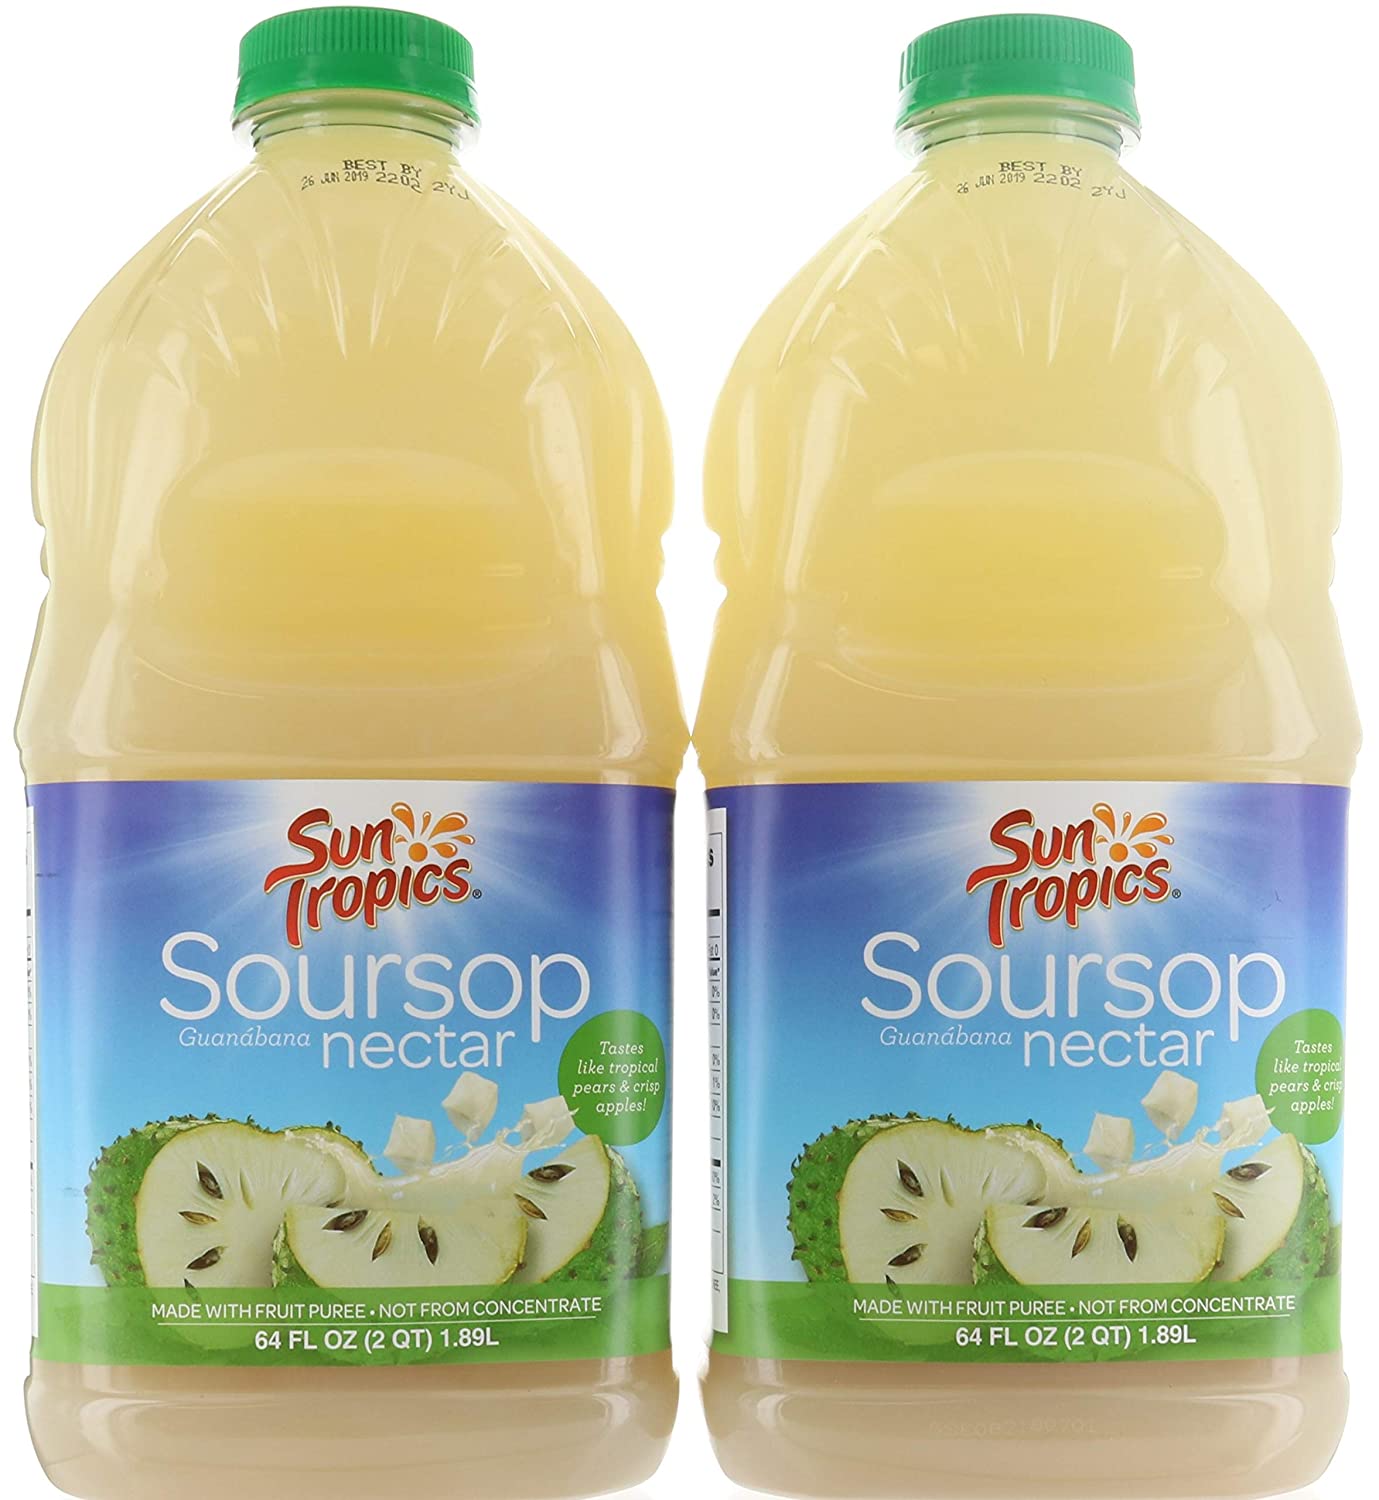 2 Bottles, Sun Tropics Soursop Guanabana Nectar tropical fruit 64 FL / 1.89 Liter Made with Fruit Puree